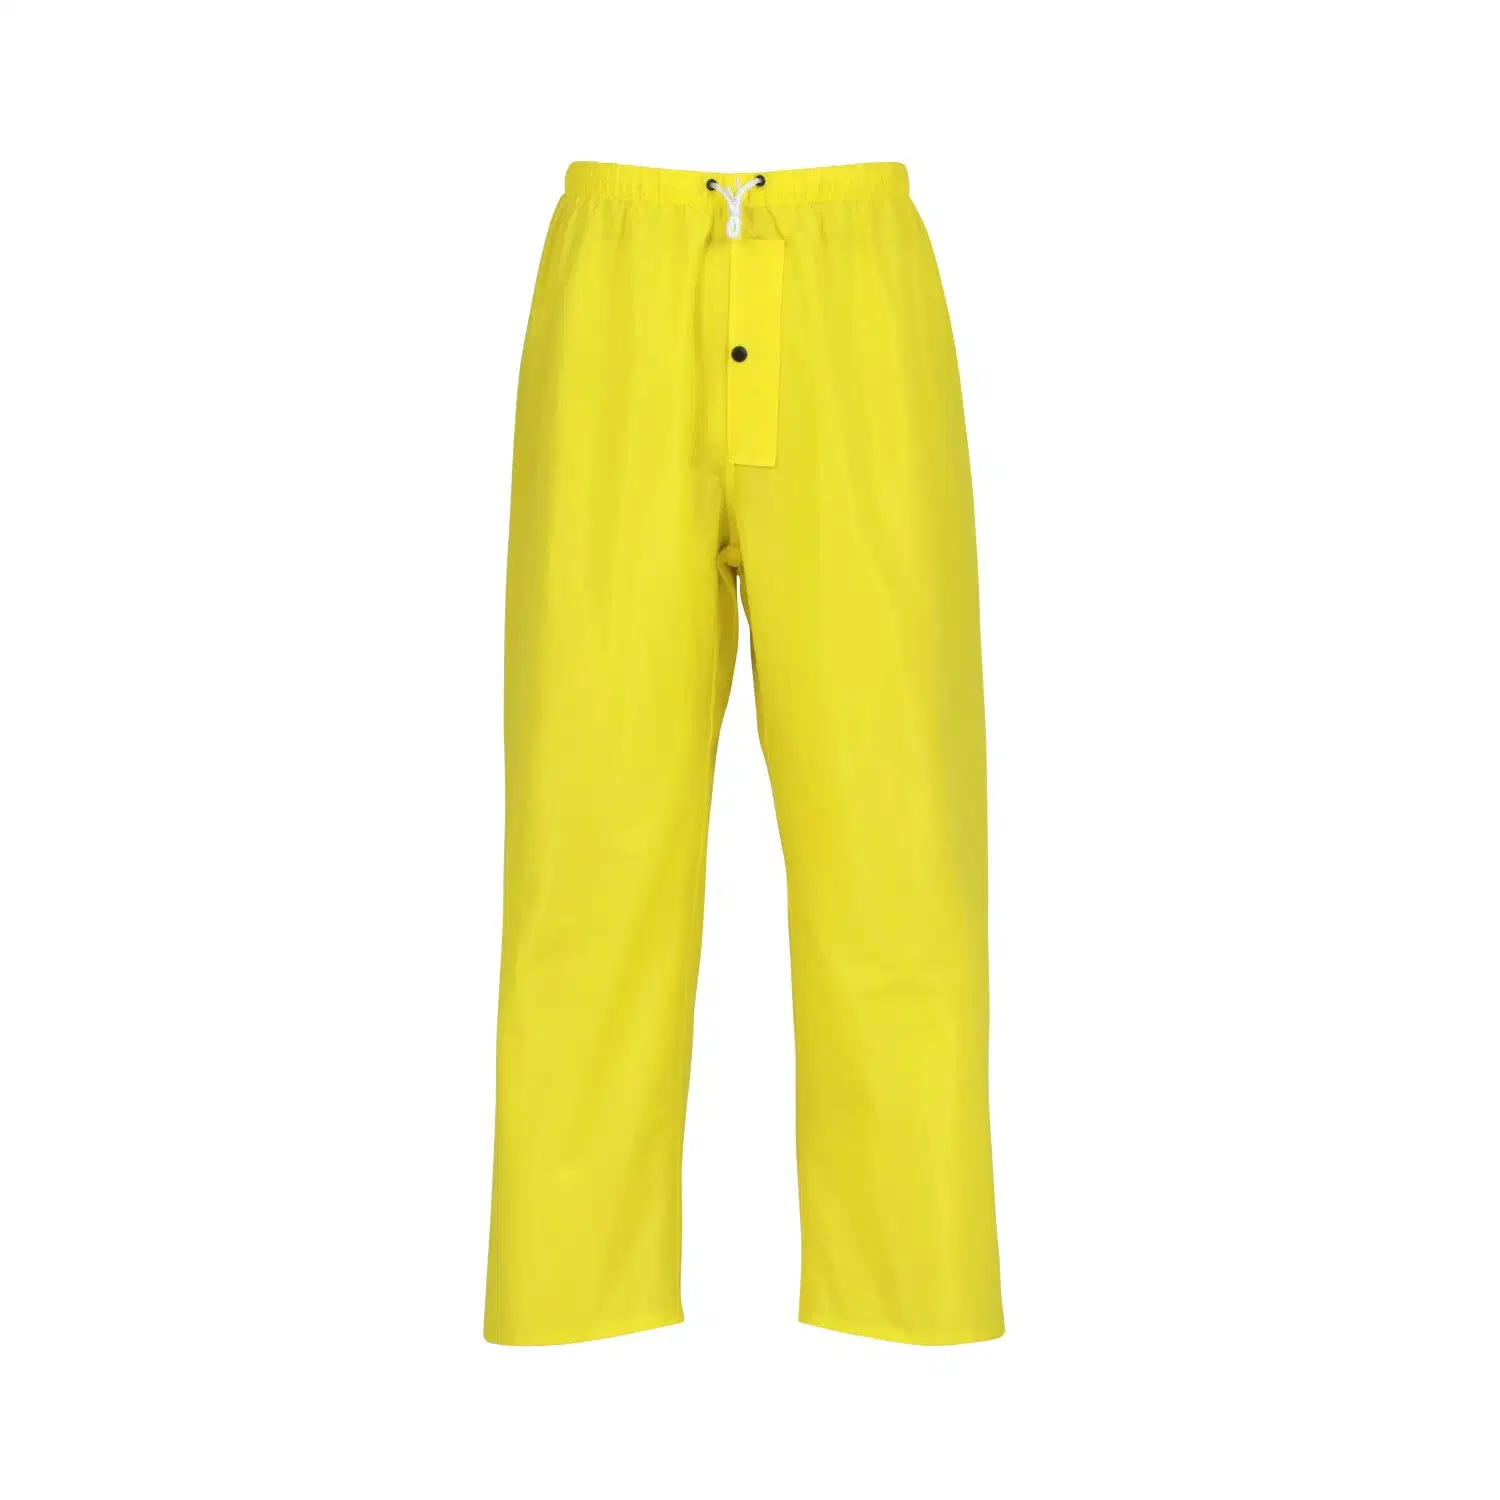 Pantalones impermeables amarillos para exteriores pantalones de lluvia para adultos pantalones de seguridad